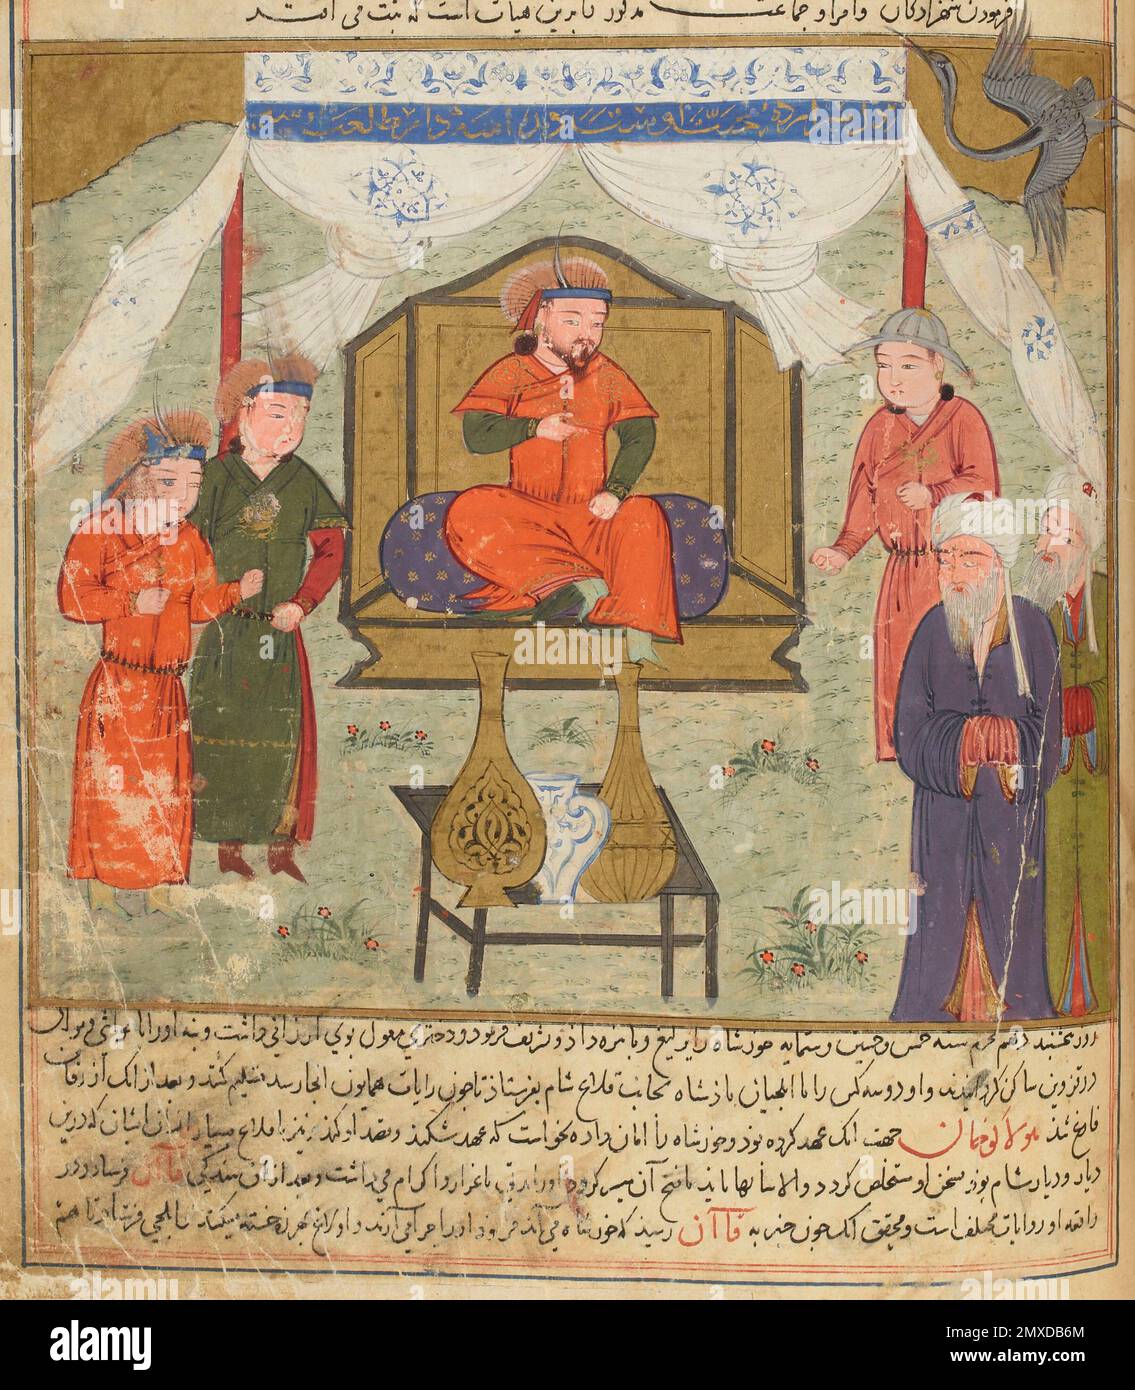 Hulagu Khan e cortigiani. Miniatura di Jami' al-tawarikh (Storia universale). MUSEO: BIBLIOTHEQUE NATIONALE DE FRANCE. Autore: ANONIMO. Foto Stock